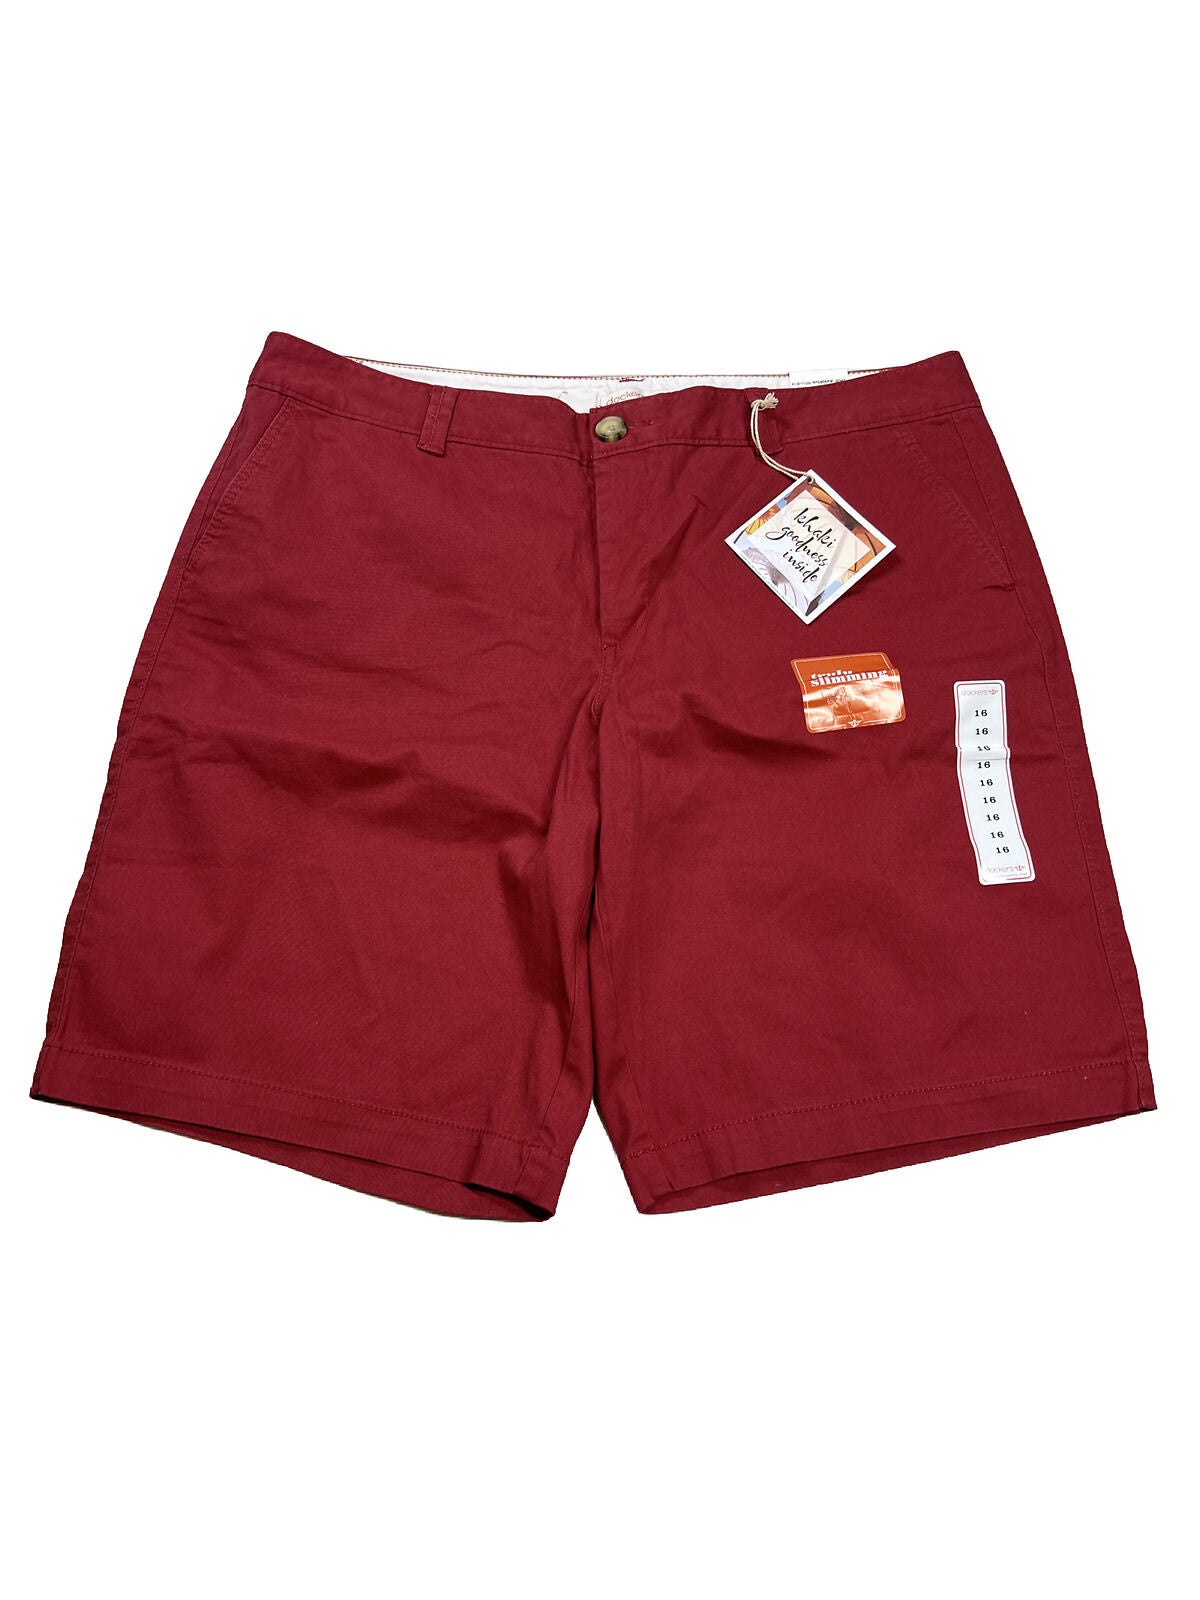 NEW Dockers Women's Red Truly Slimming Khaki Shorts - 16